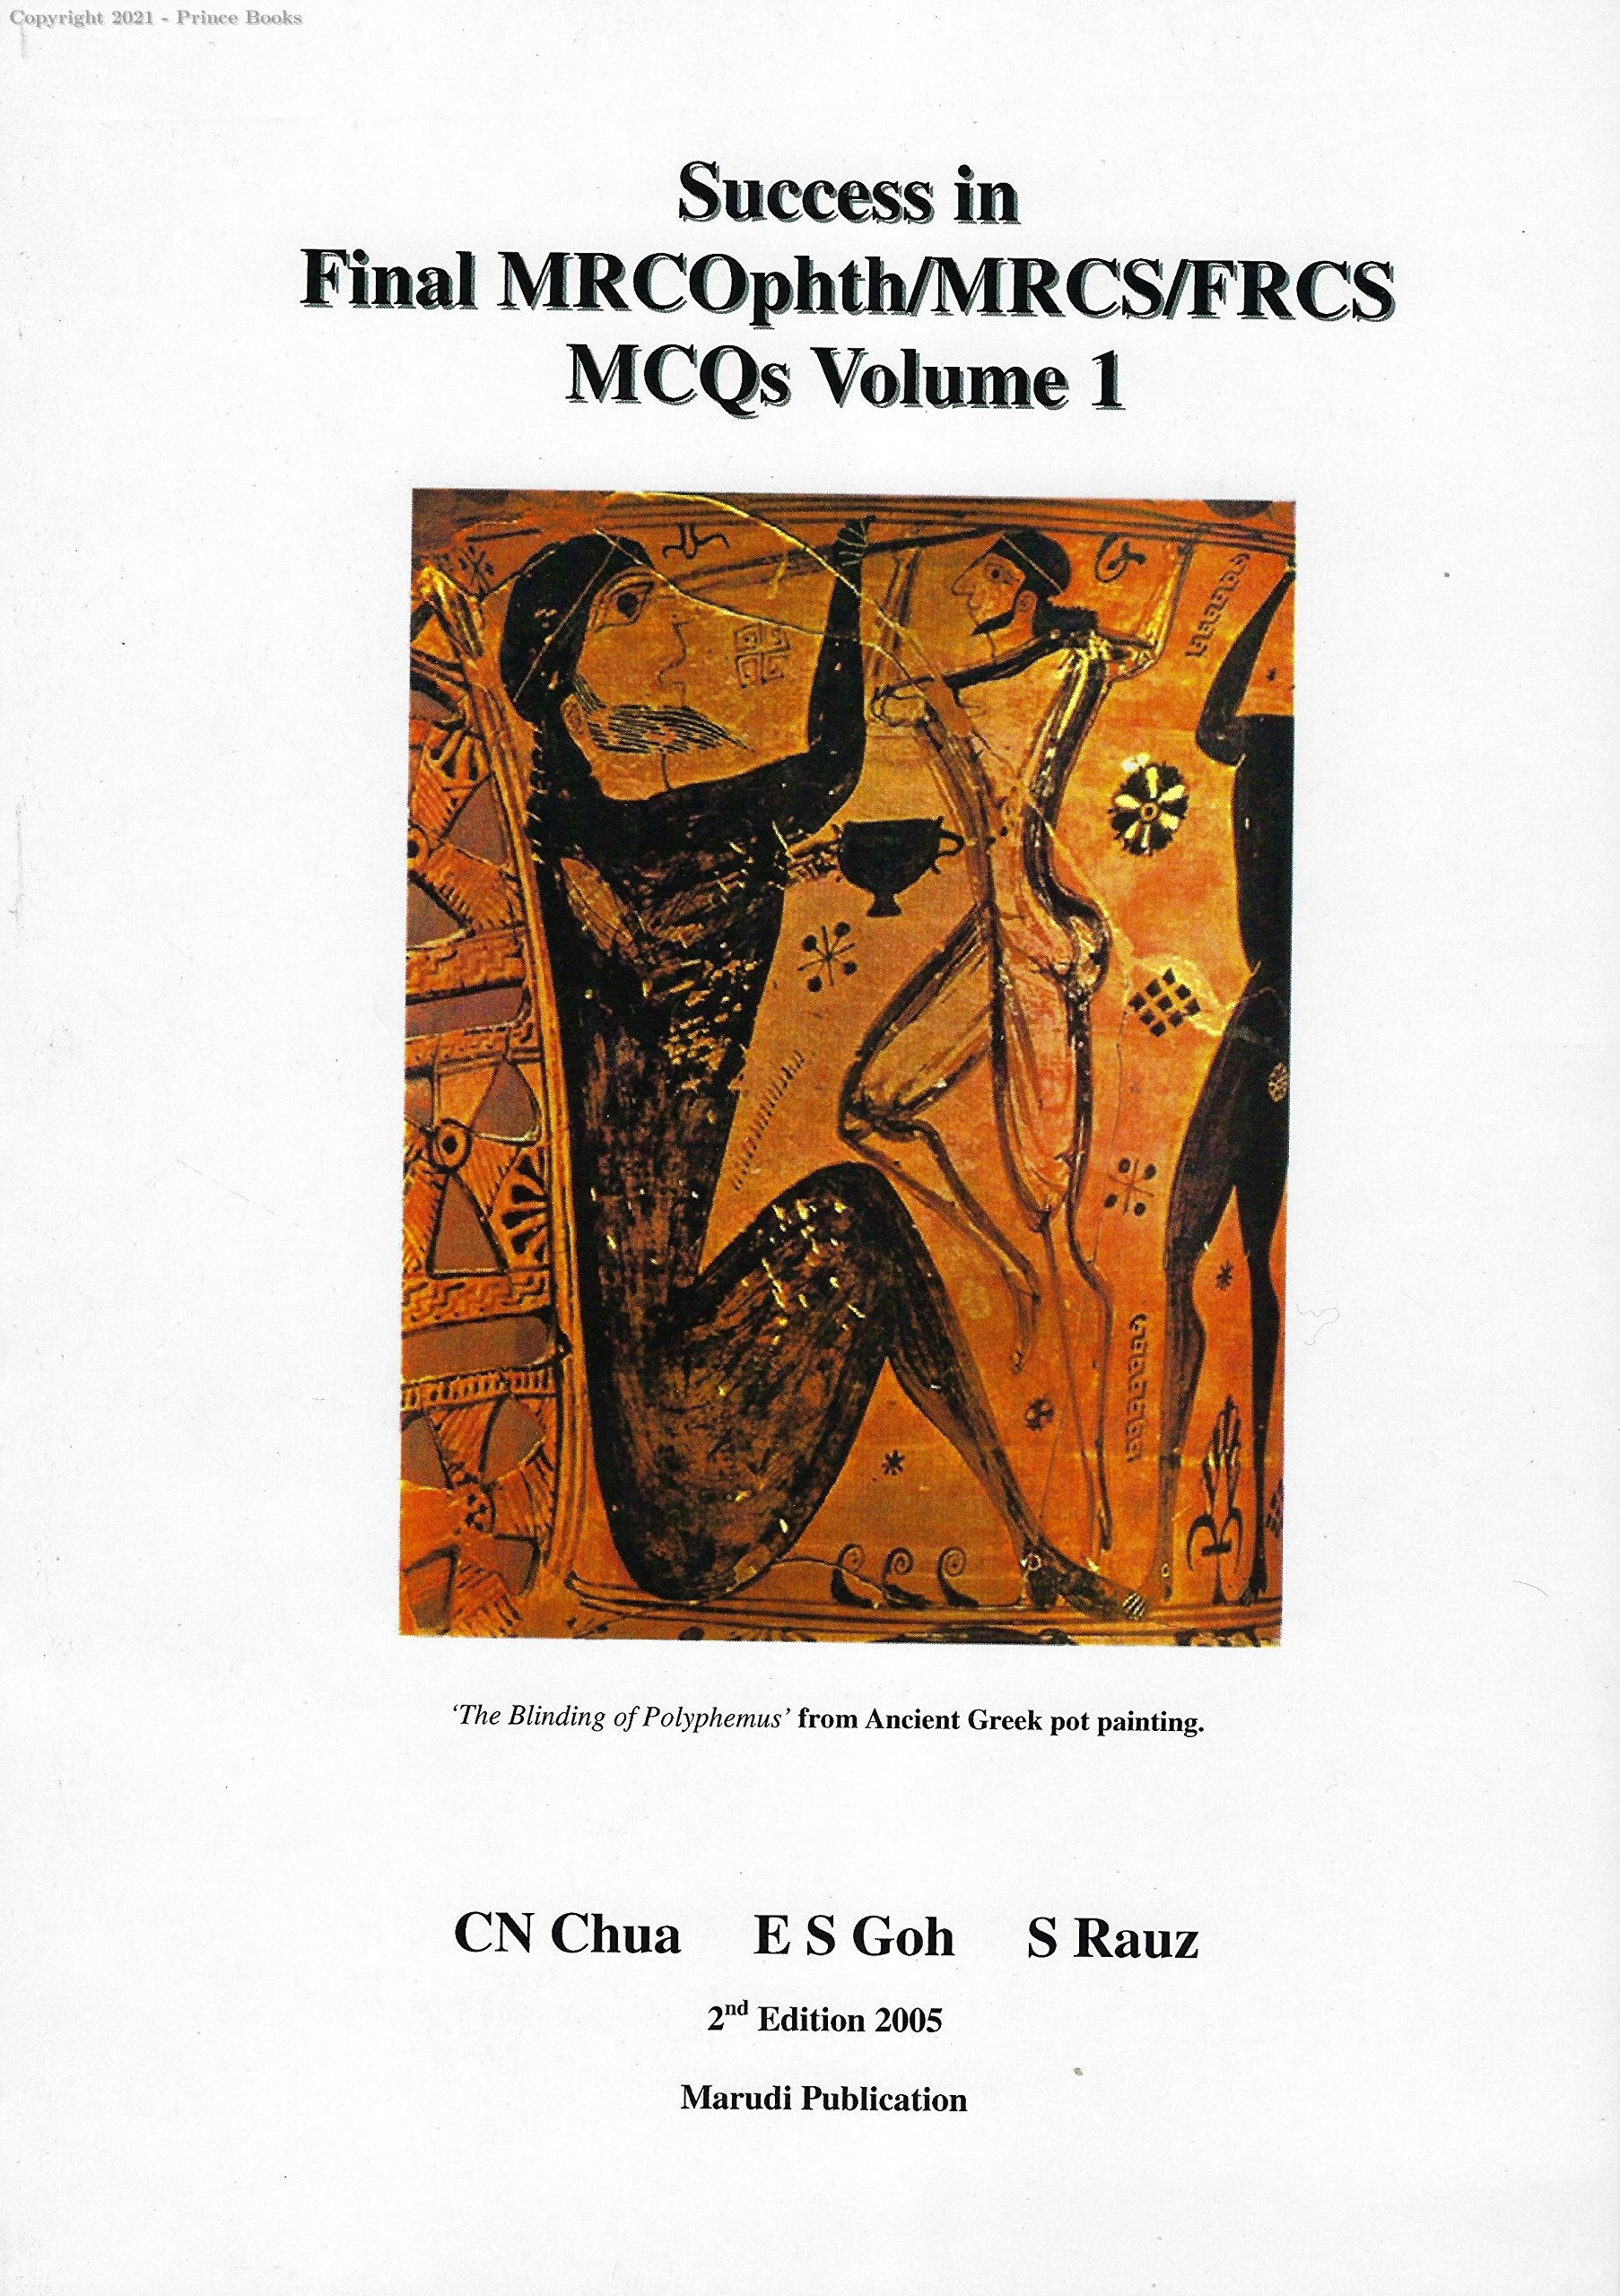 Success in Final MRCOphth/MRCS/FRCS MCQs Volume 1